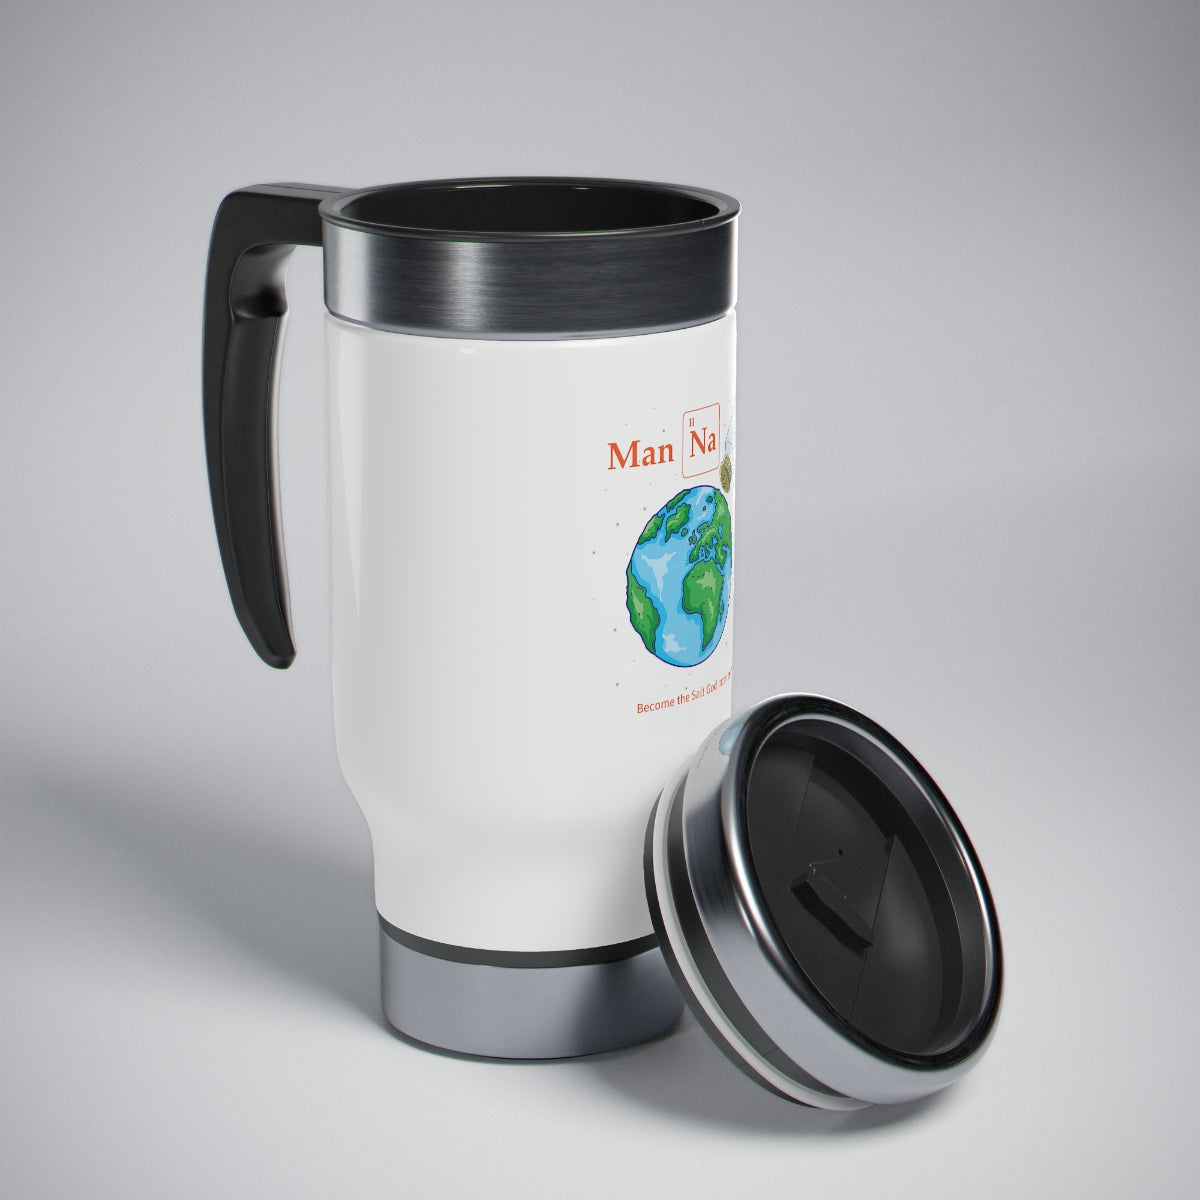 Man Na - Stainless Steel Travel Mug with Handle, 14oz